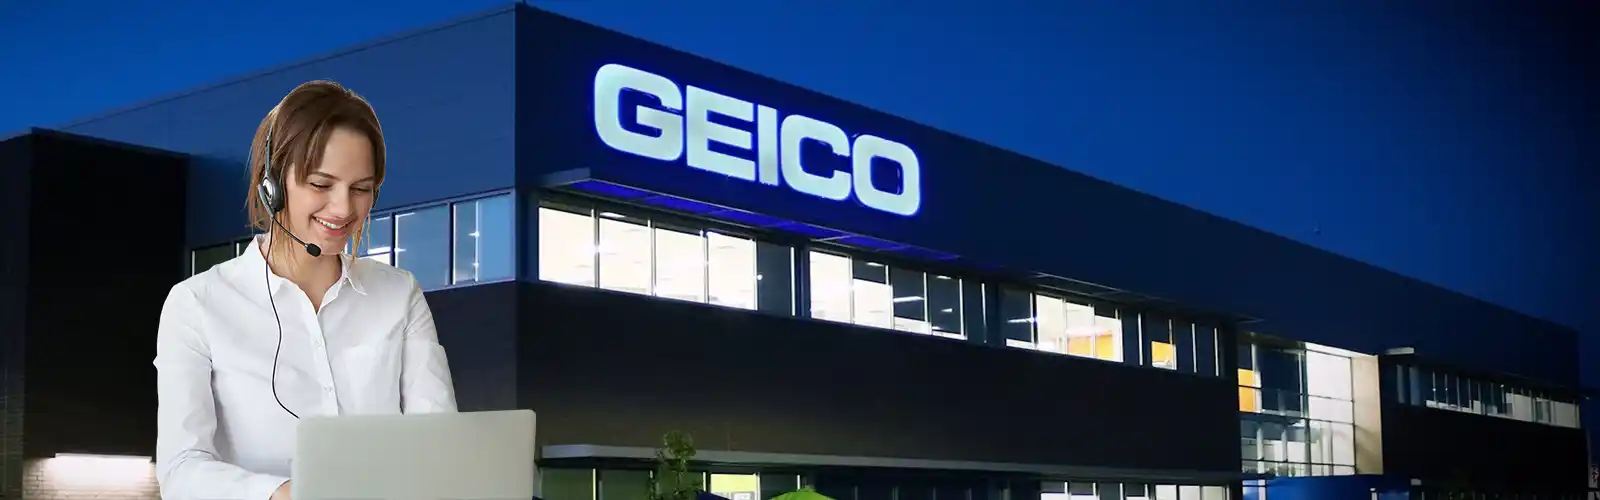 Geico-Customer-Service-Phone-Number